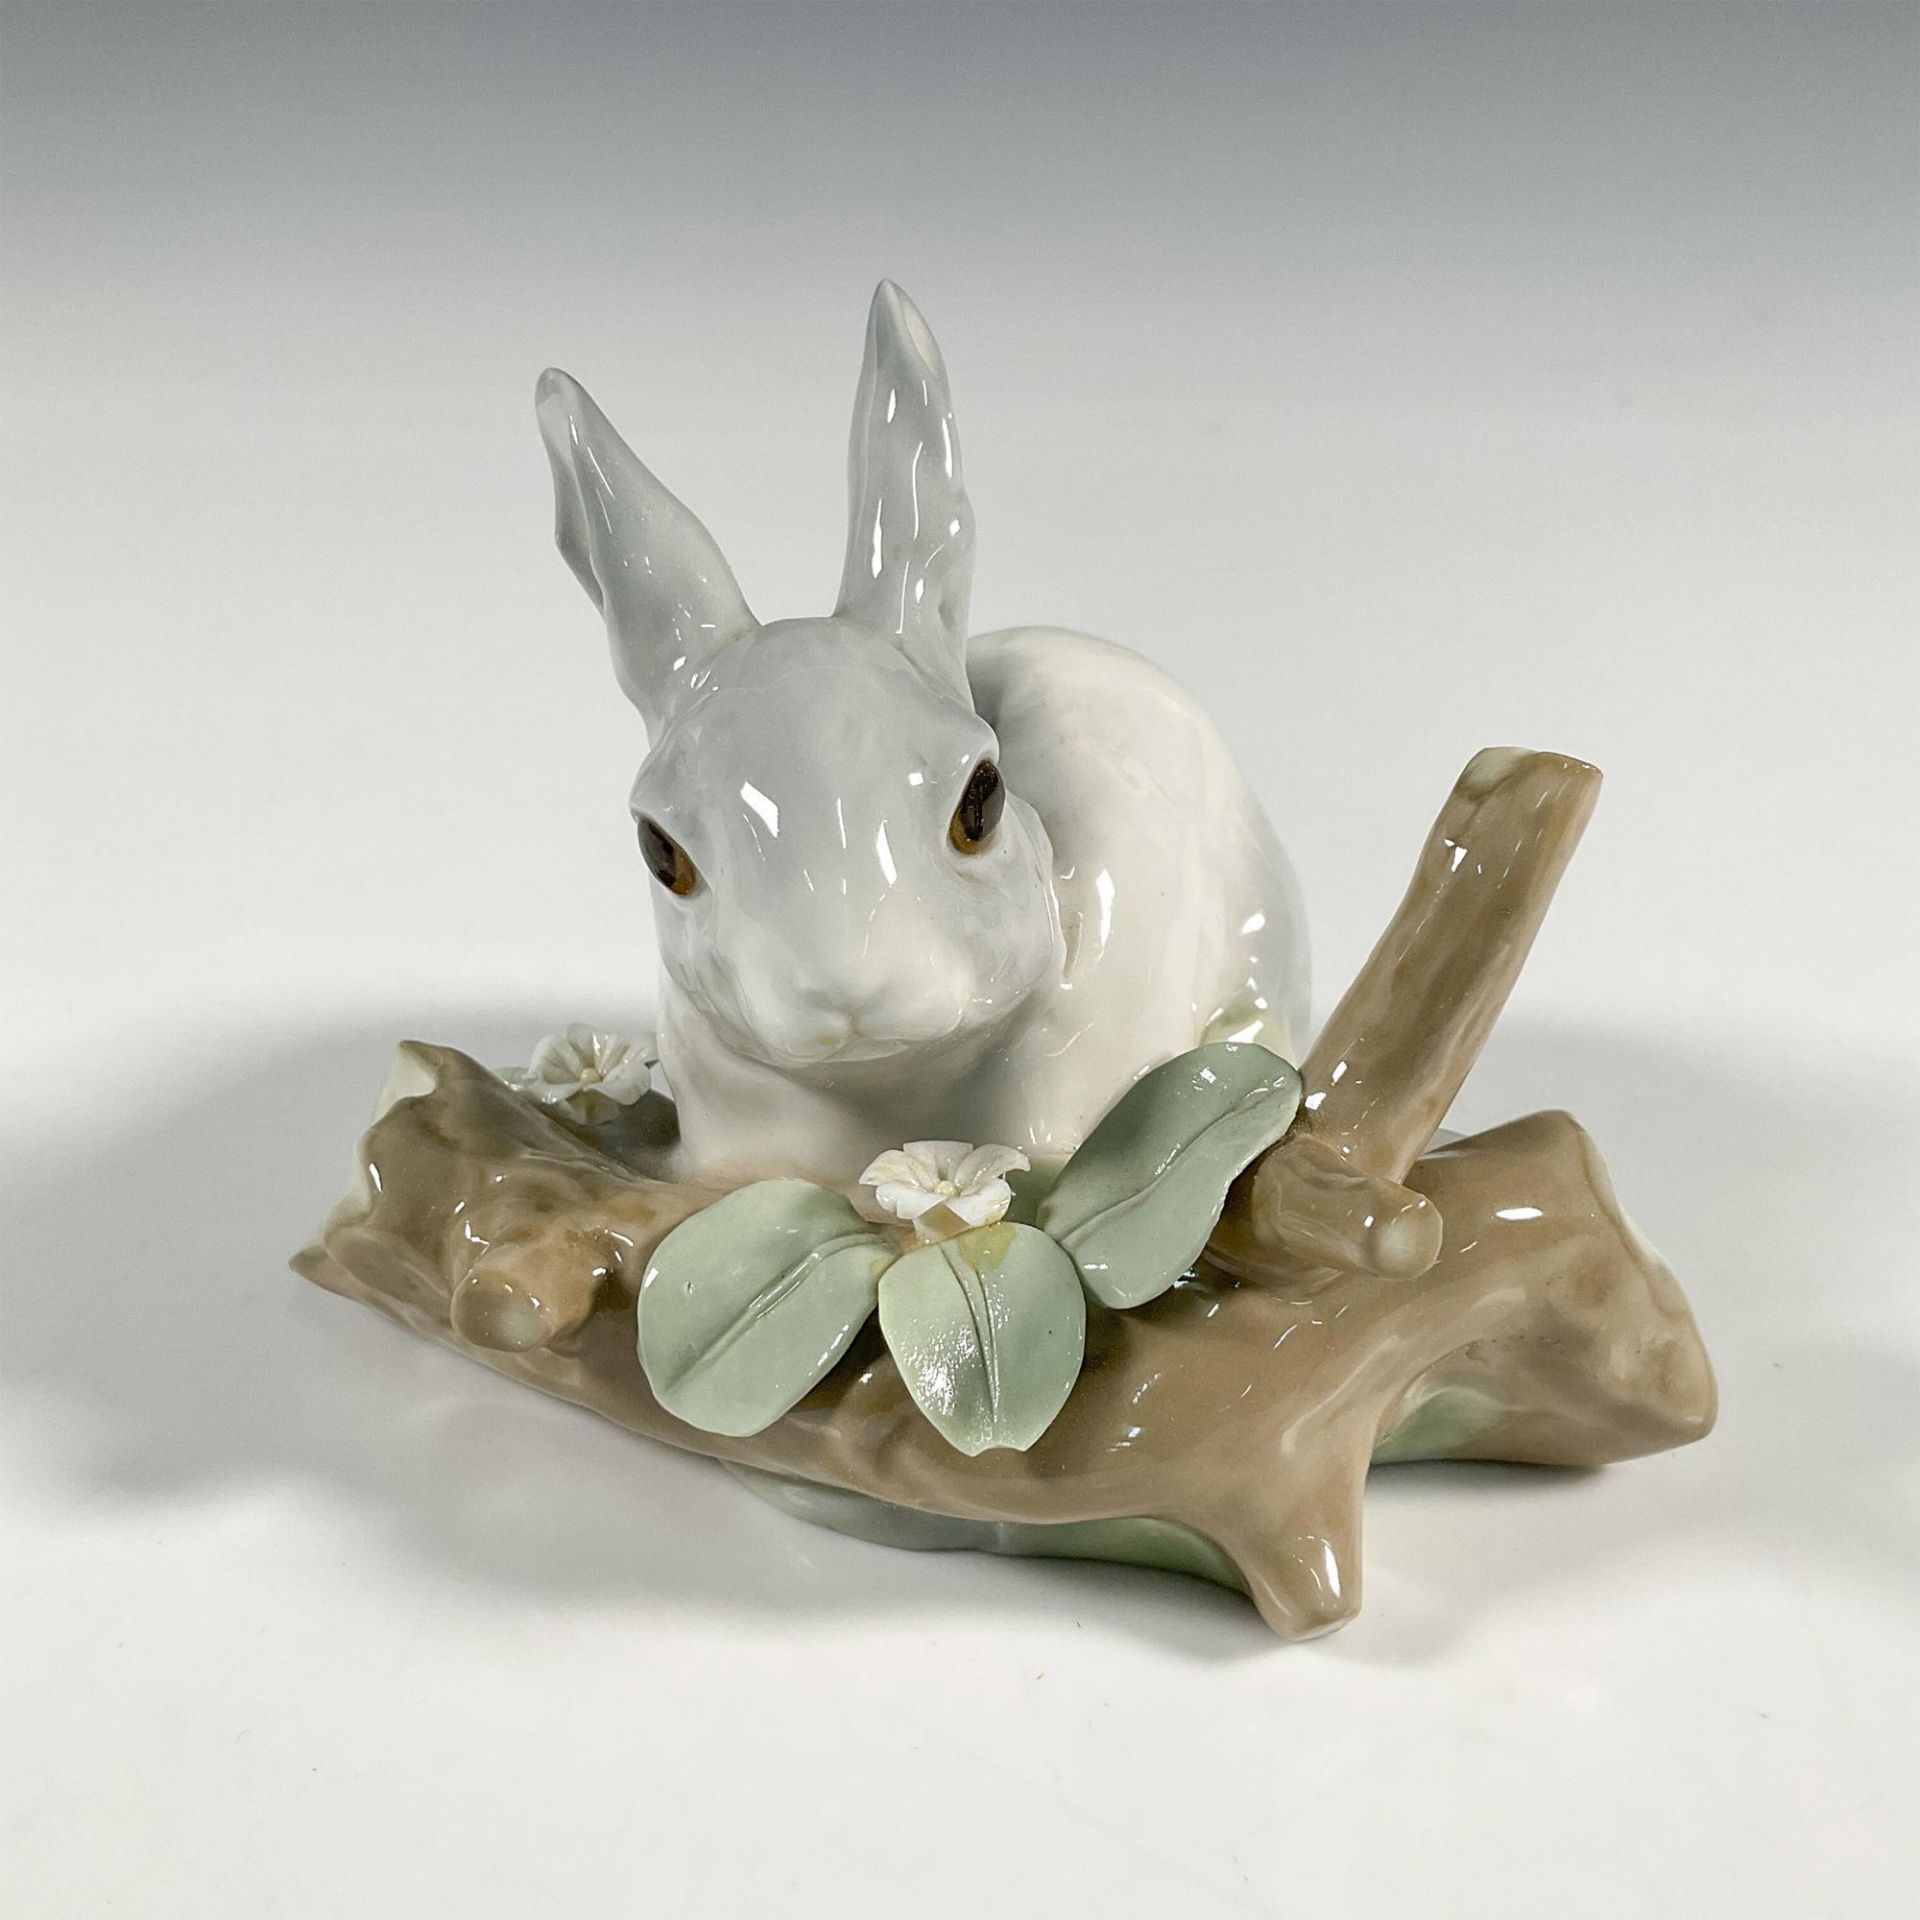 Rabbit Eating 1004773 - Lladro Porcelain Figurine